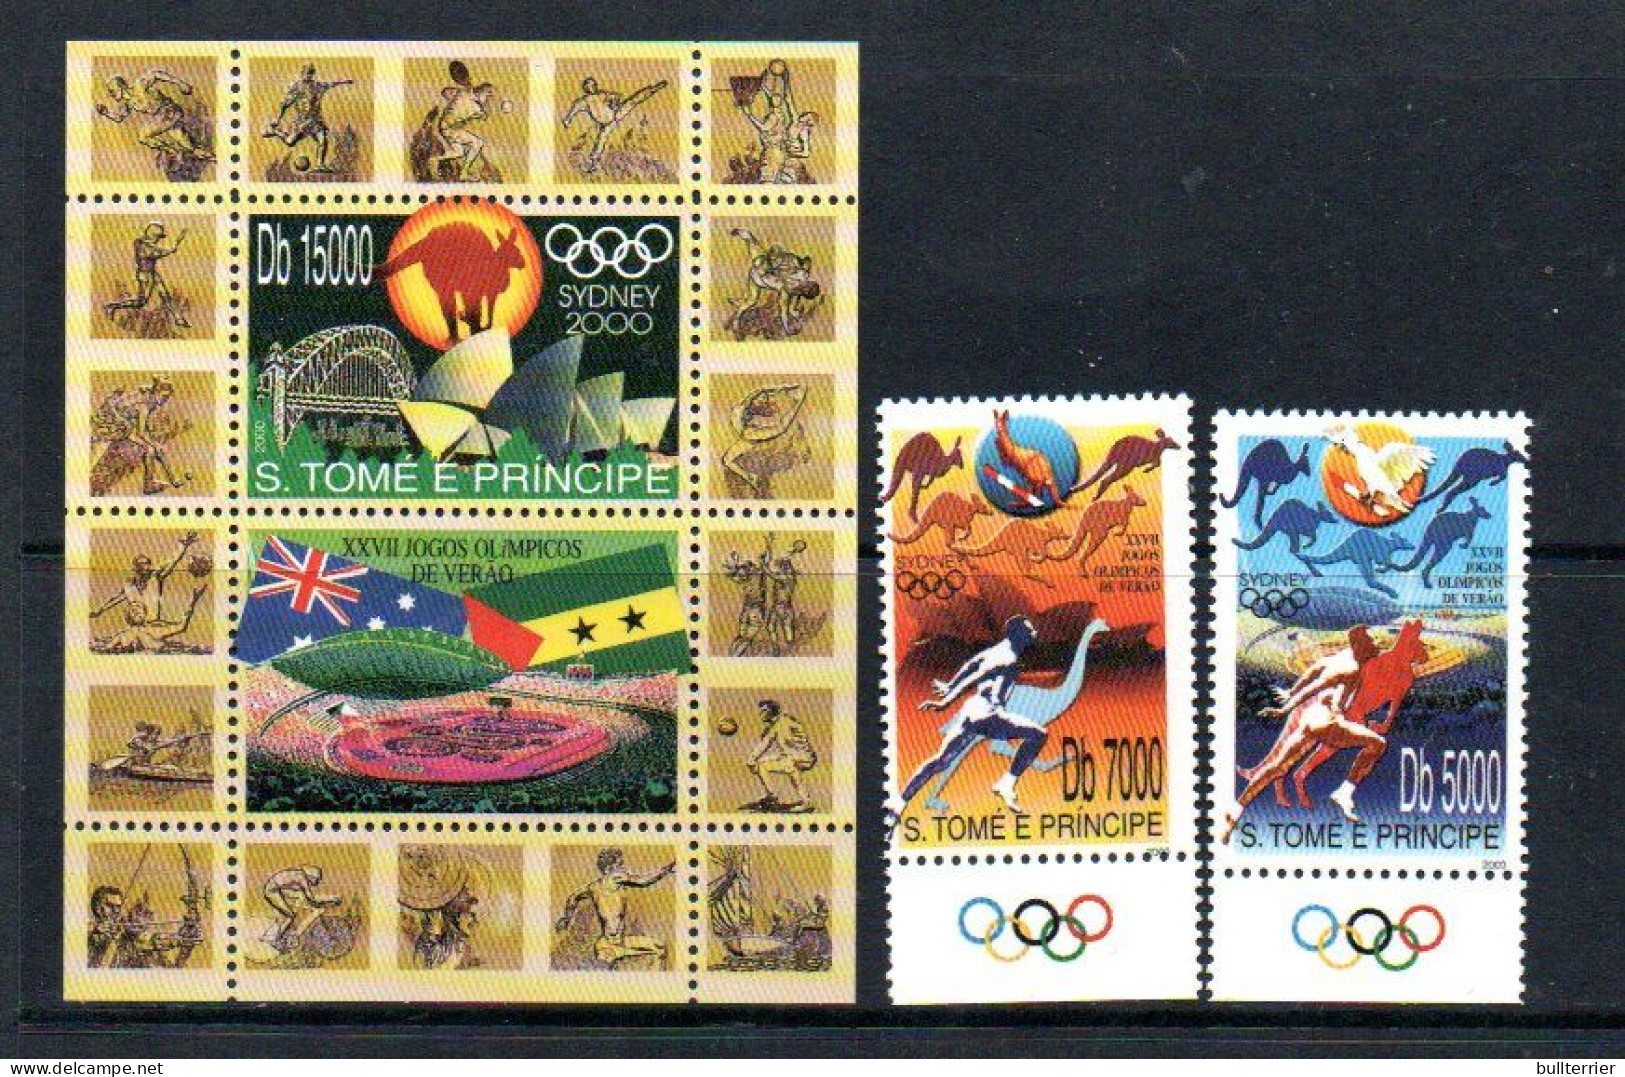 OLYMPICS -  ST HOMAS PRINCE -  2000-Sydney Olympics Set Of 2 + S/sheet  Mint Never Hinged - Summer 2000: Sydney